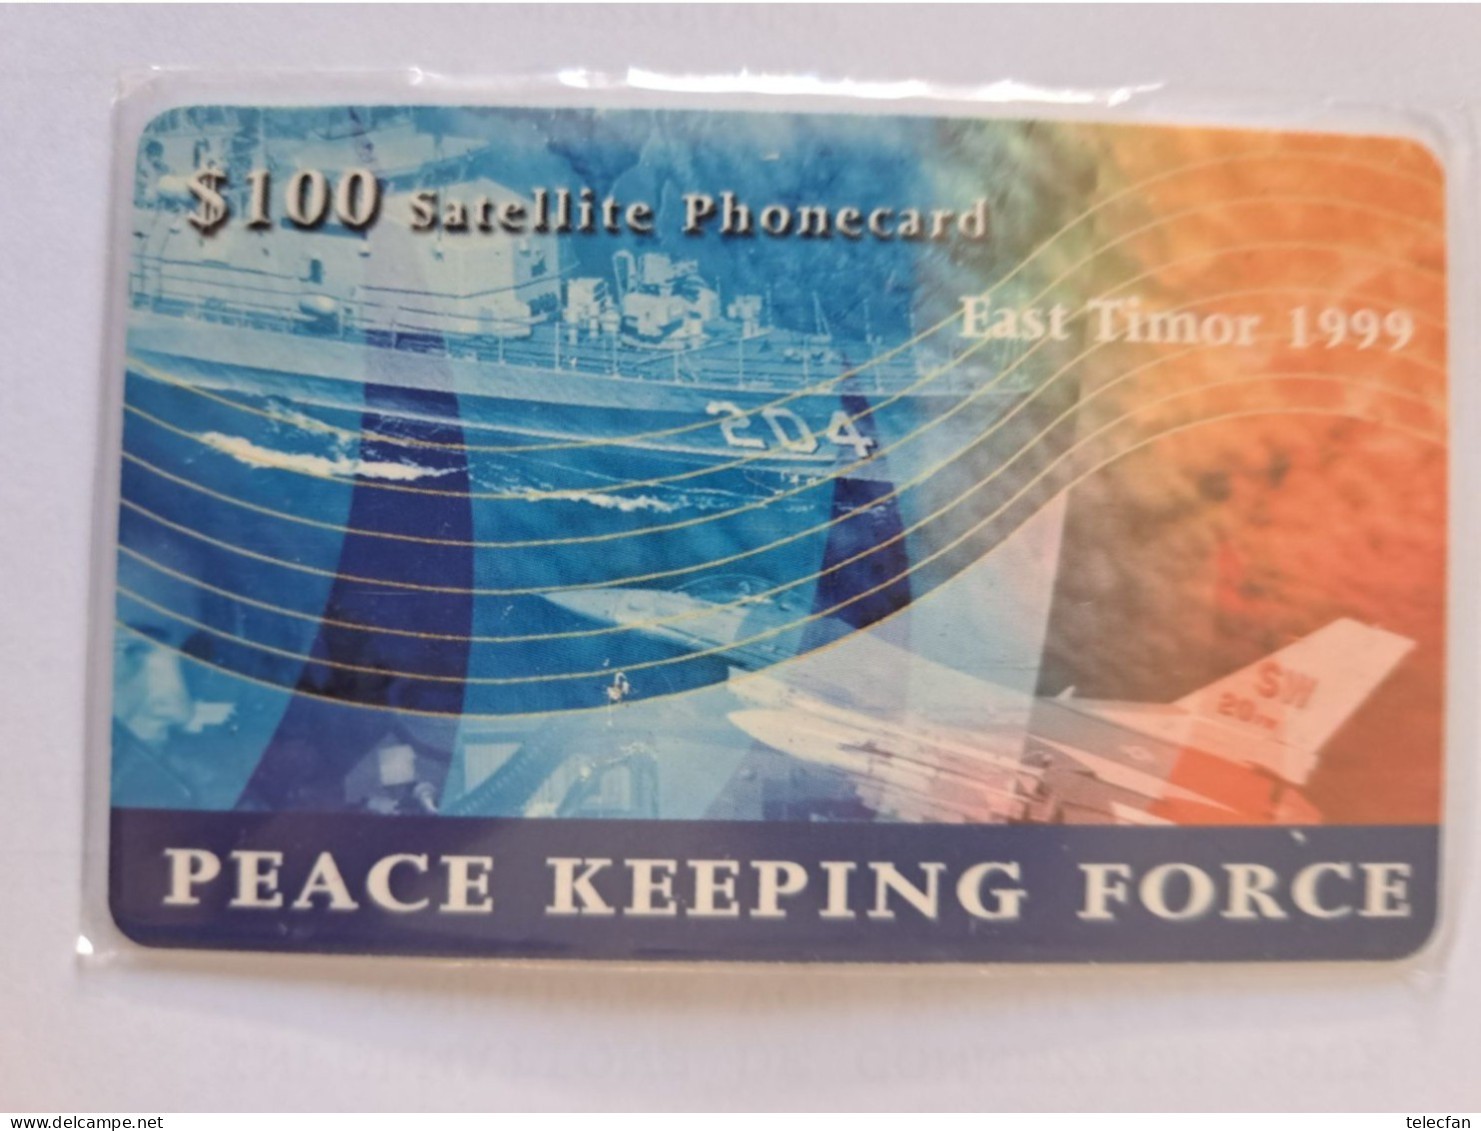 TIMOR ORIENTAL SATELLITE CARD CABLE & WIRELESS 100$ UT 1999 VERY RARE VERY GOOD CONDITION - Timor Oriental